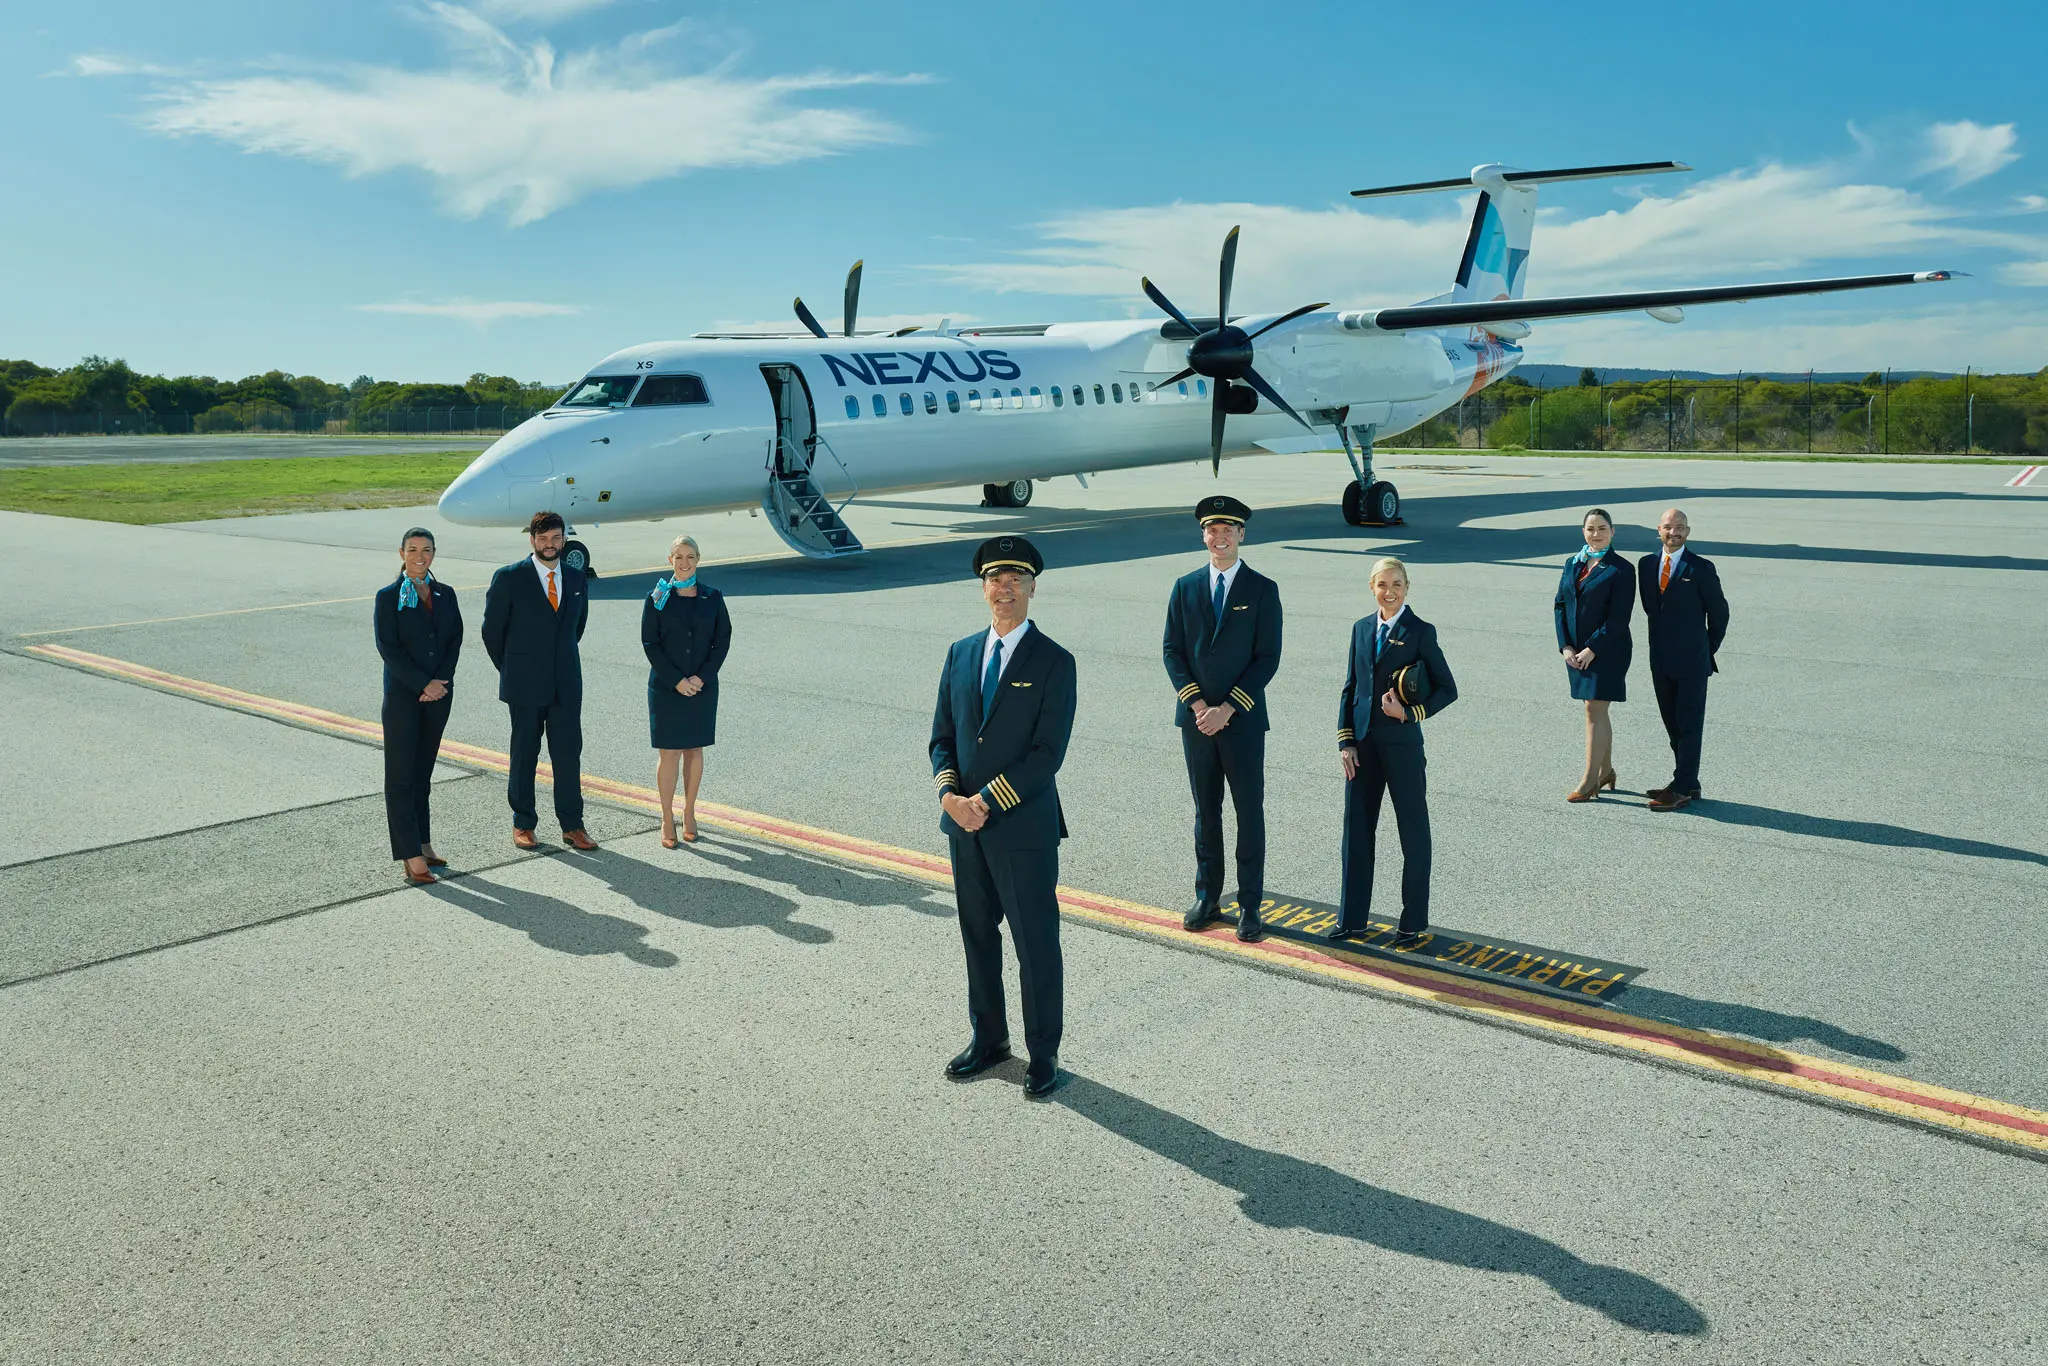 Nexus Airlines crew posing in front of a Nexus airplane